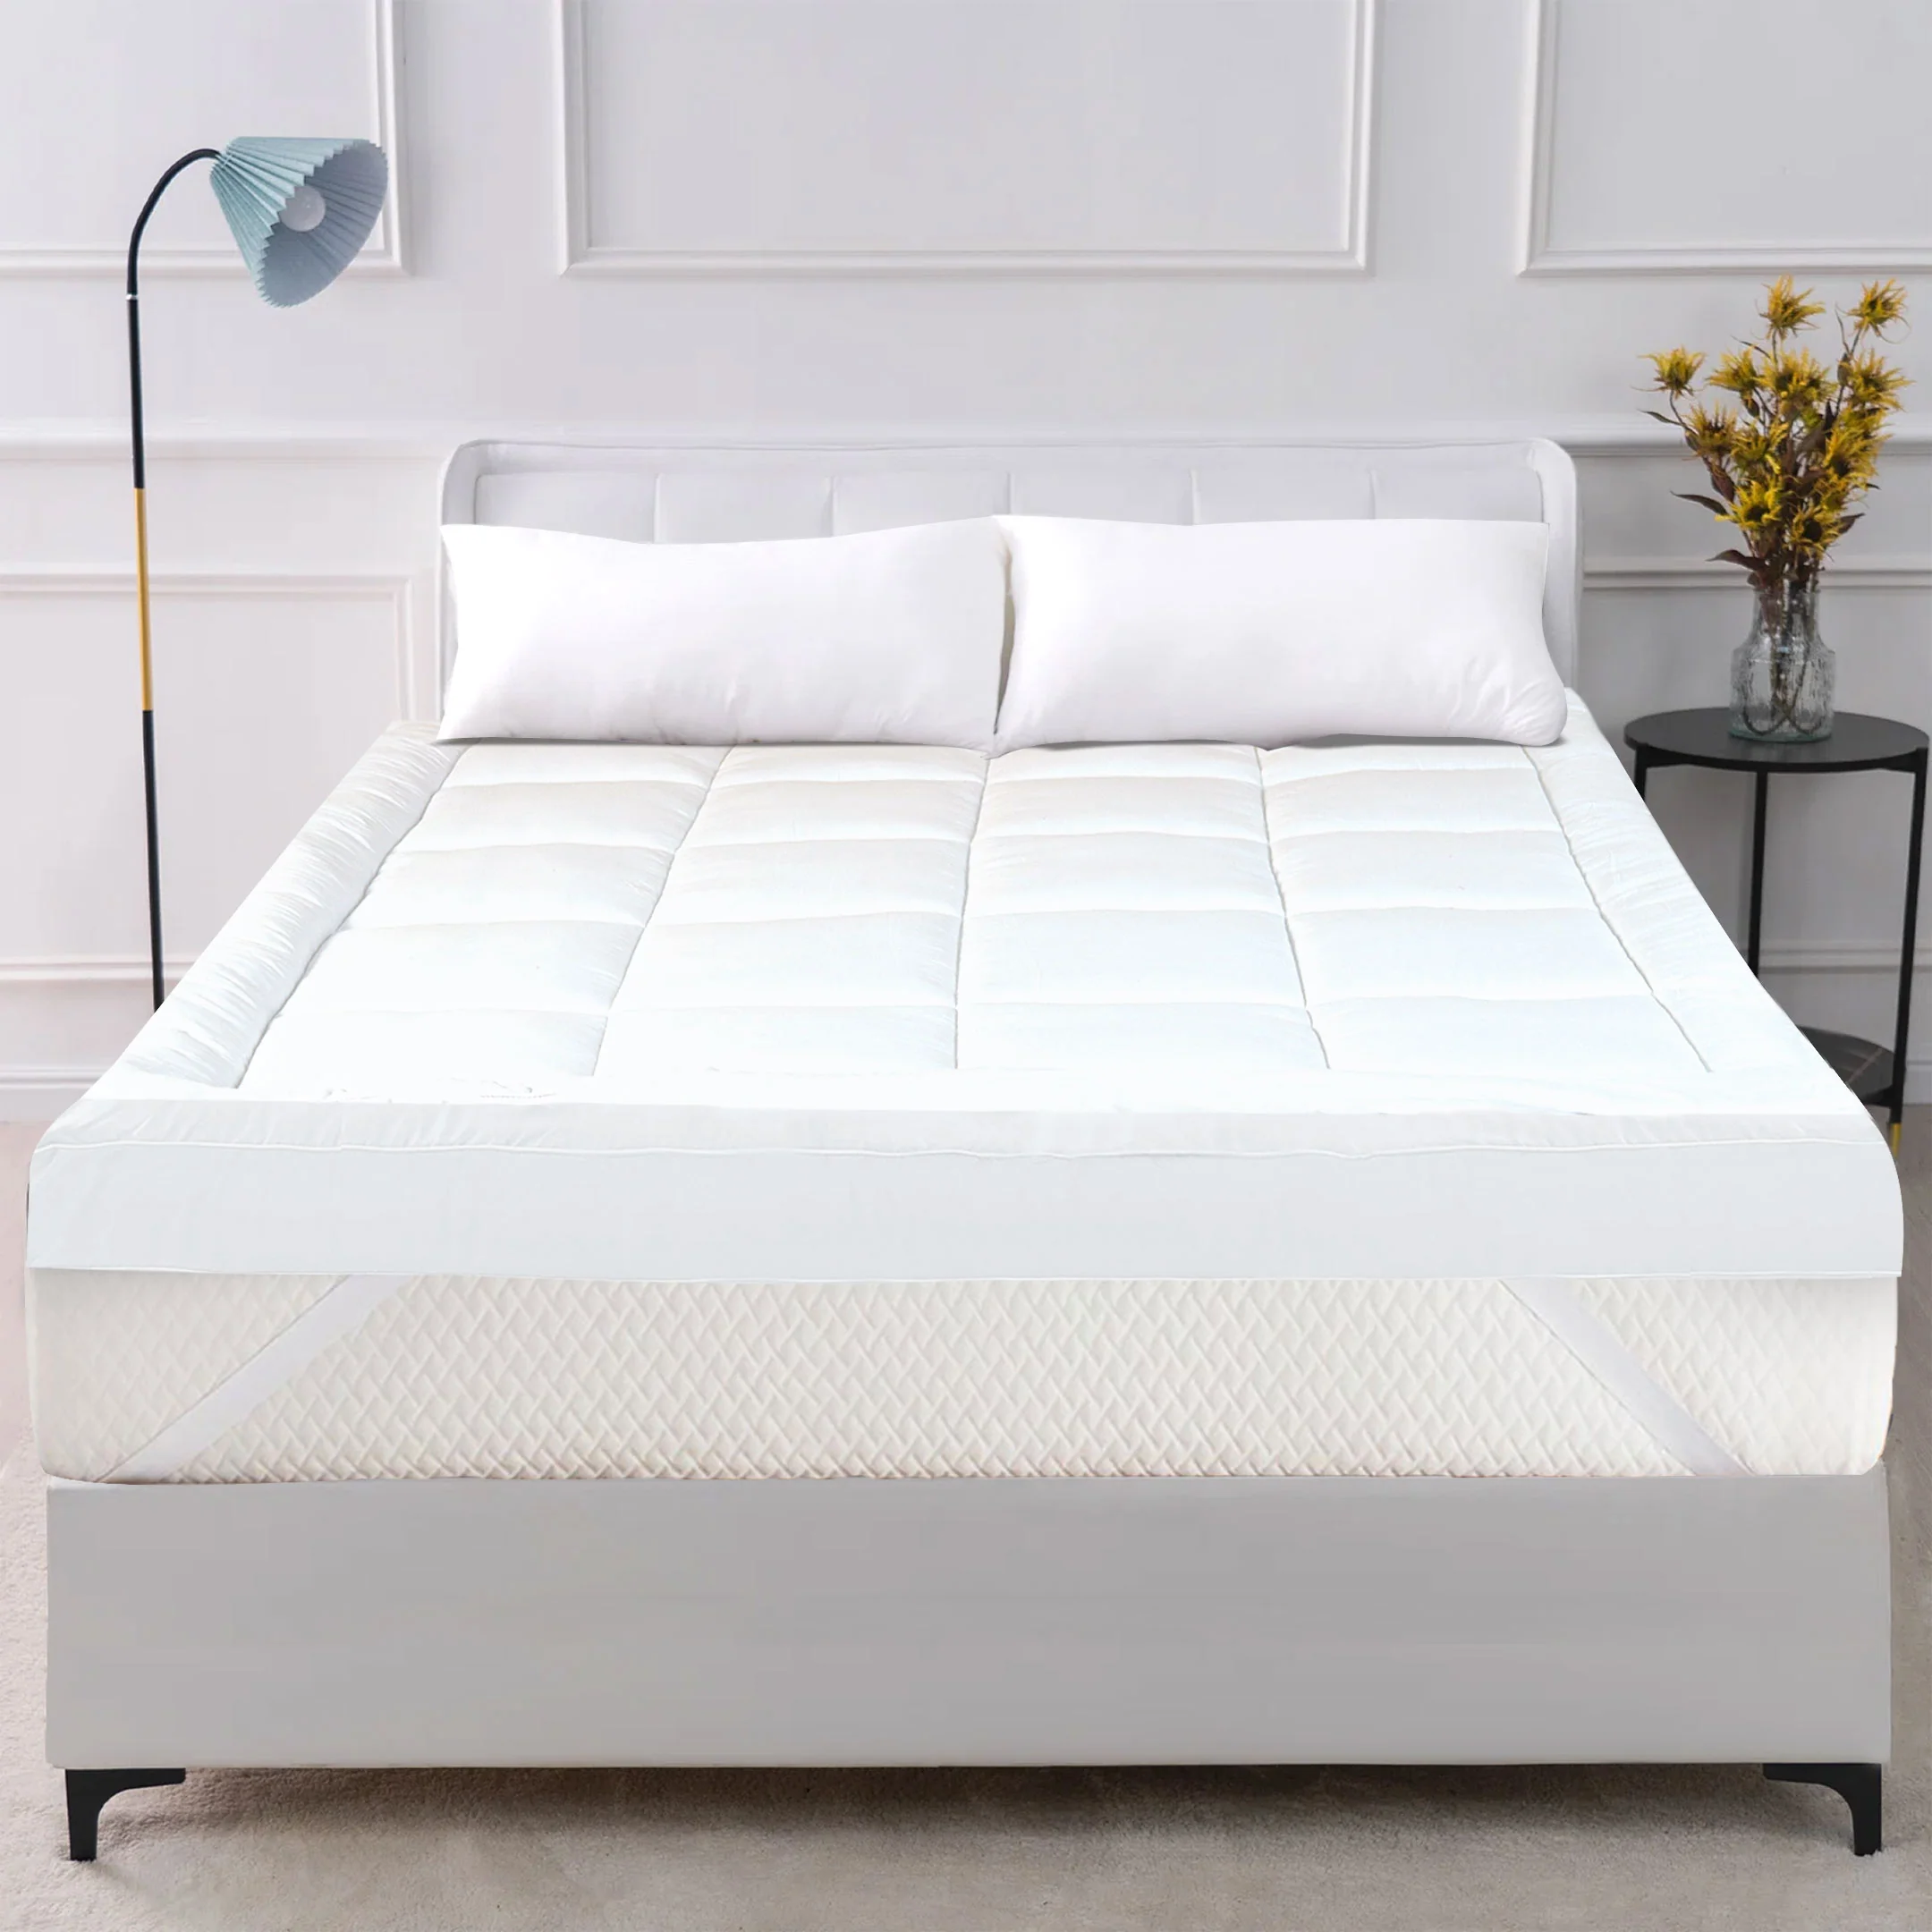 Mattress Topper or New Mattress, high quality mattresses memory foam toppers , bed guru, trouble sleeping